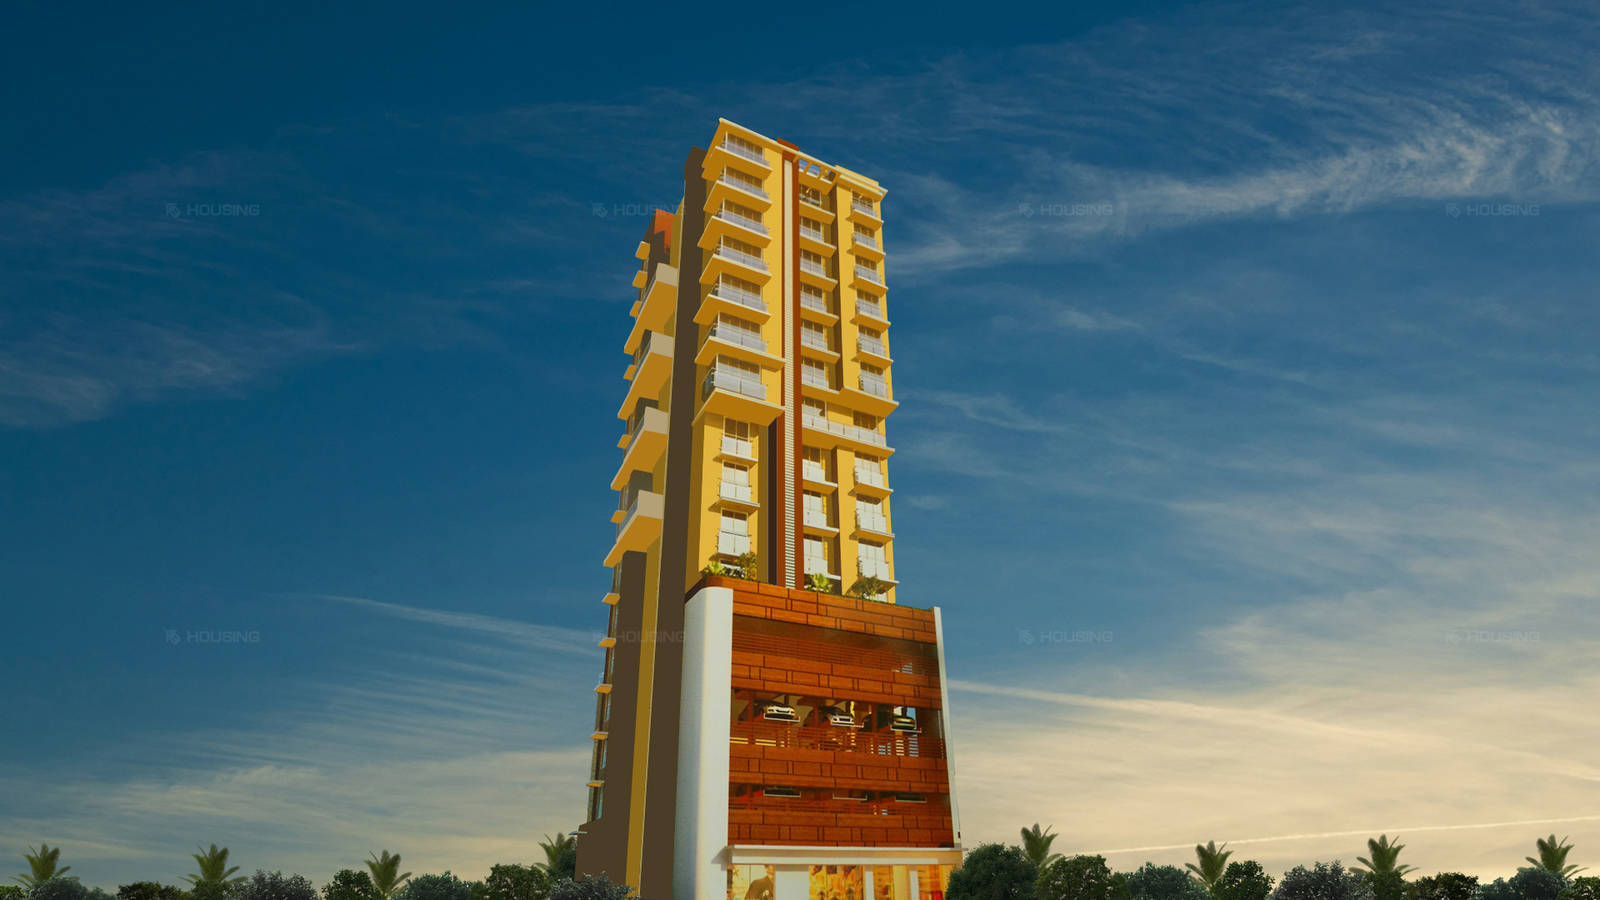 Residential Multistorey Apartment for Sale in Junction 07, 5th 1st Road, Opp Hanuman Temple, S V Road , Khar Road-West, Mumbai